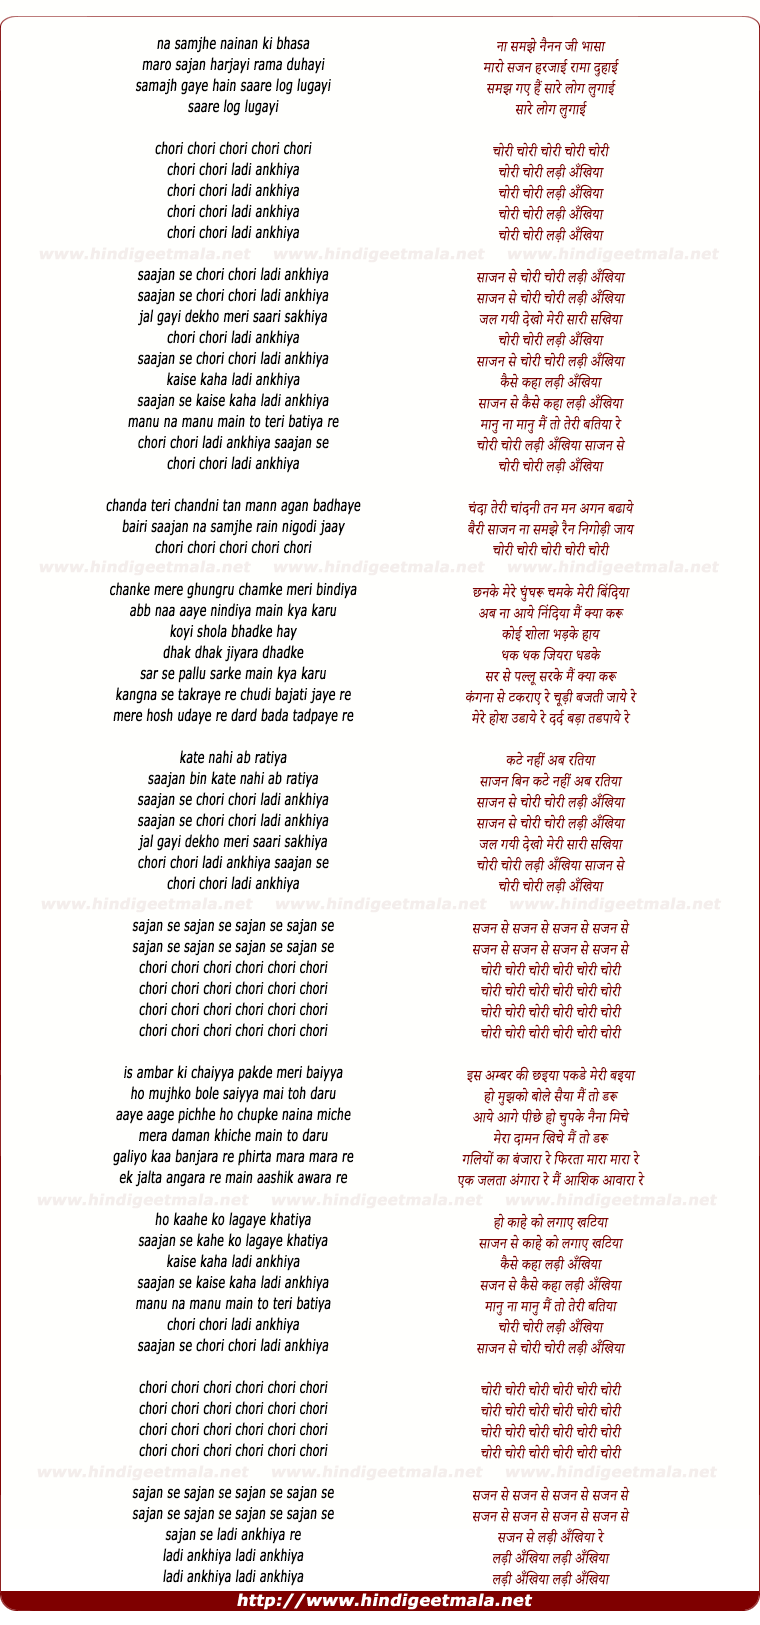 lyrics of song Chori Chori Ladi Ankhiya